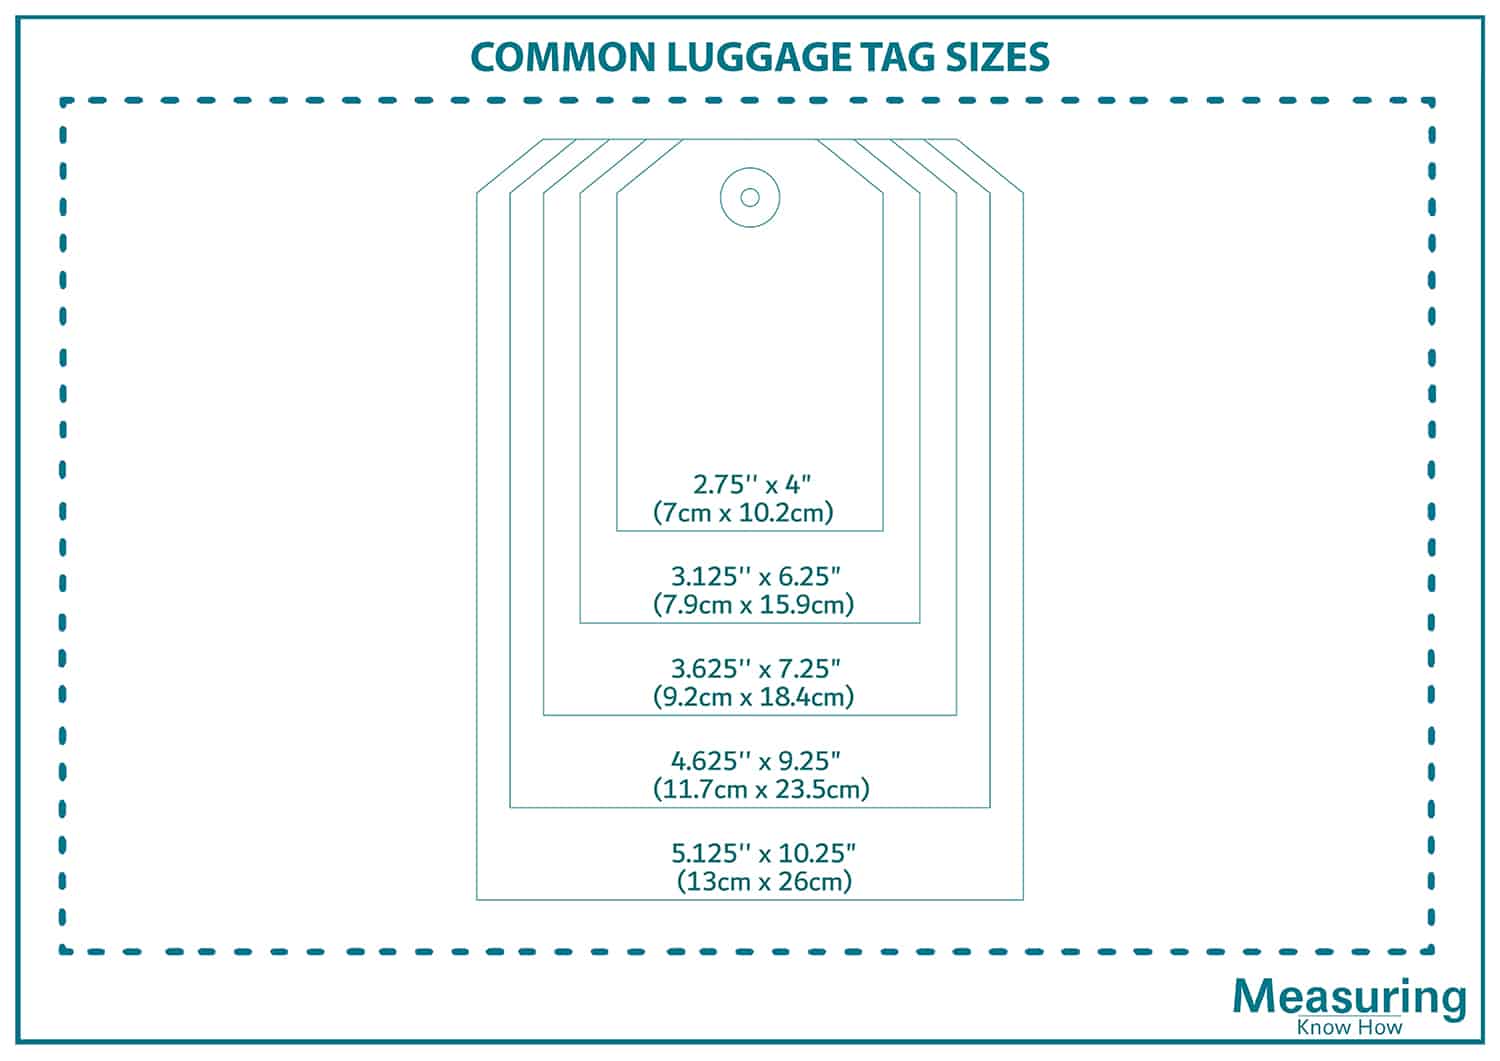 Common luggage tag sizes